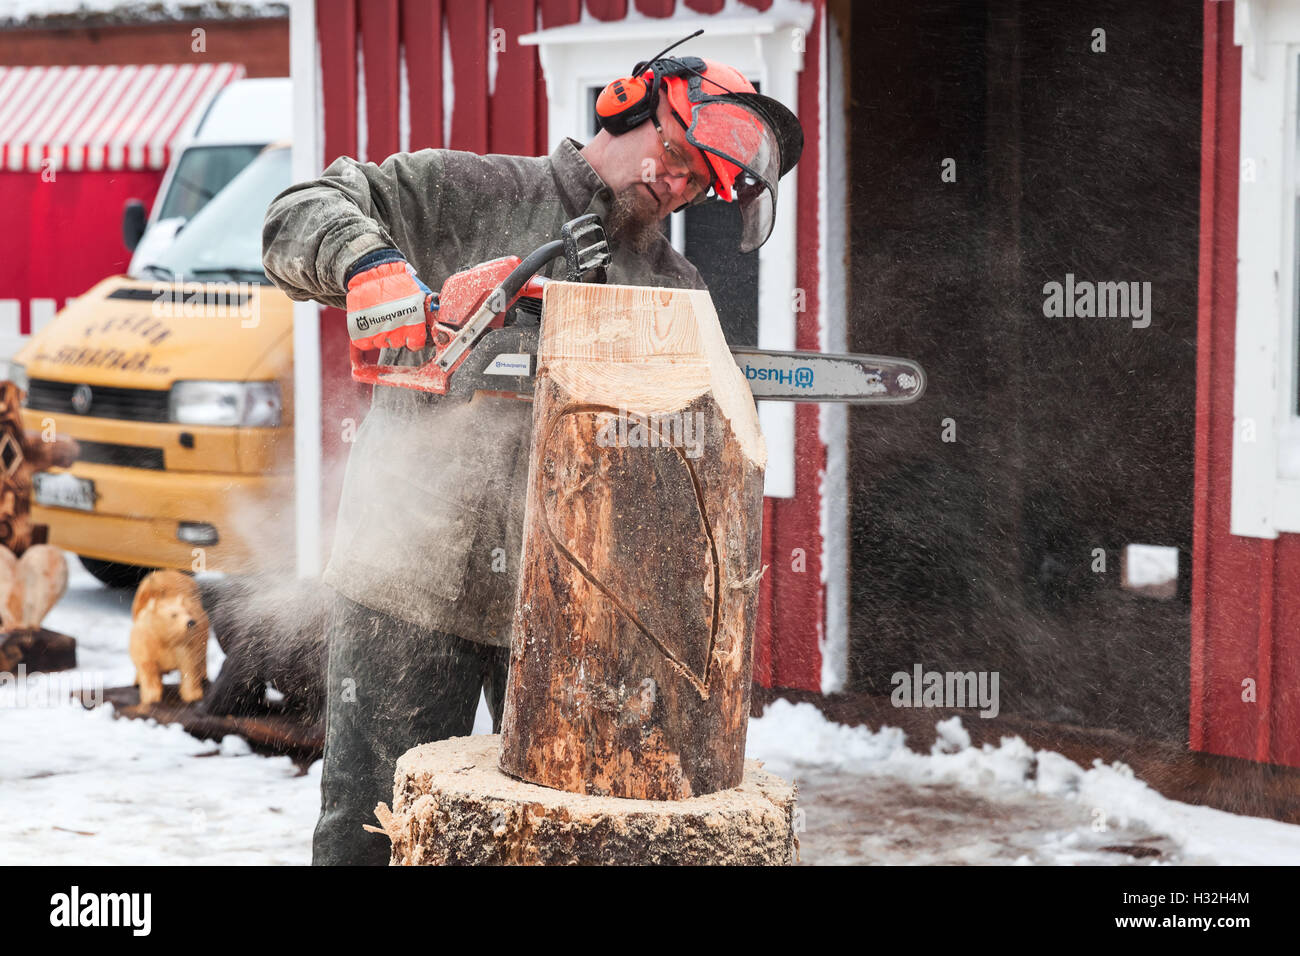 Hamina, Finland - December 13, 2014: Master sculptor with a chainsaw produces wooden bird sculpture Stock Photo